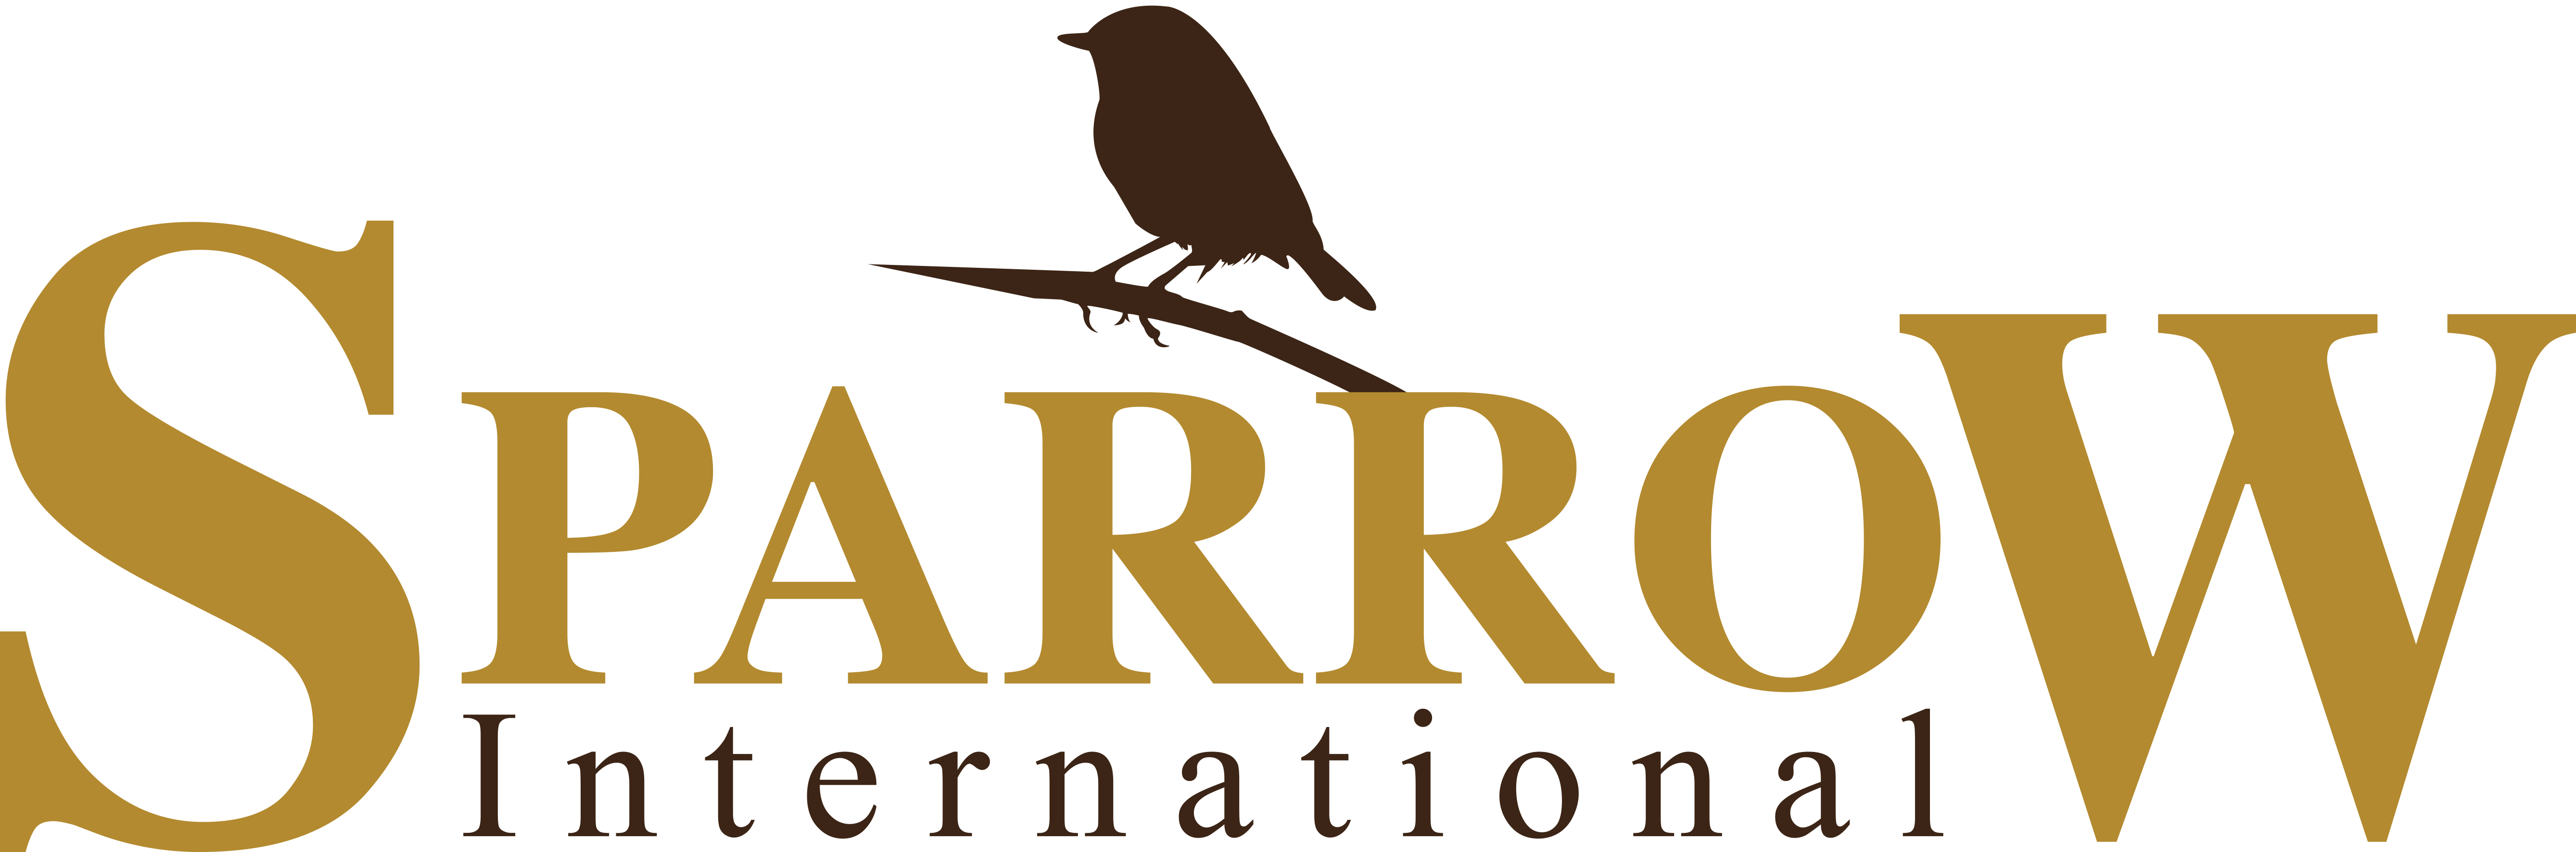 Sparrow international-best coffee supplier in Dubai - Contact us banner